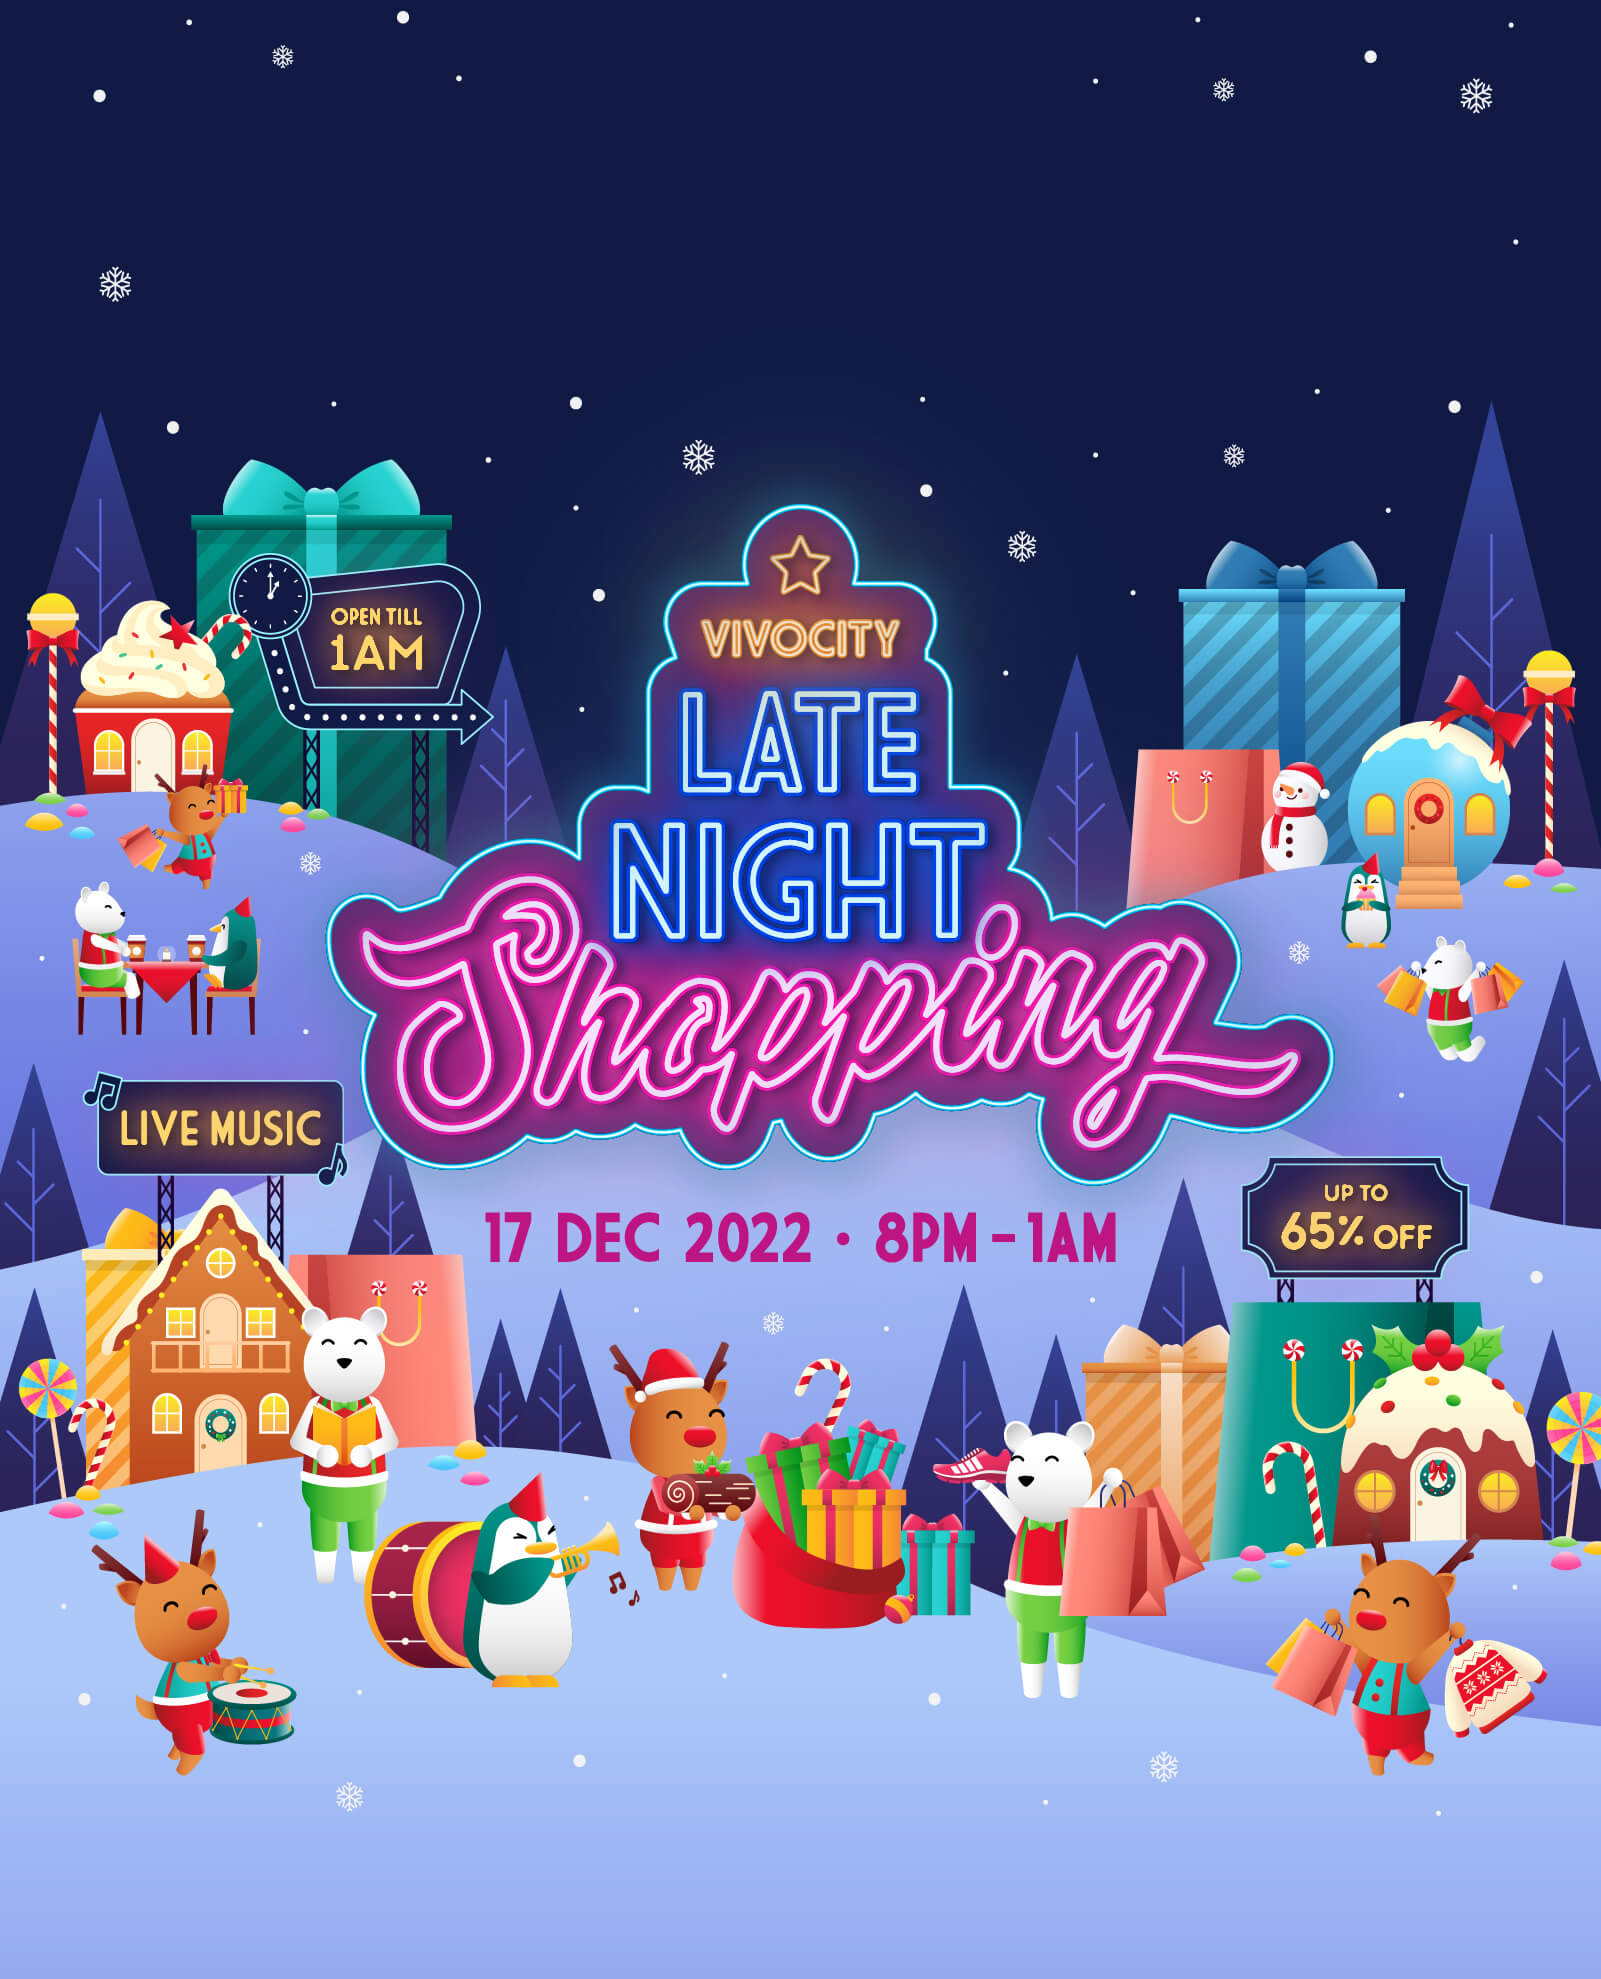 Vivocity late night shopping on 17 Dec 2022